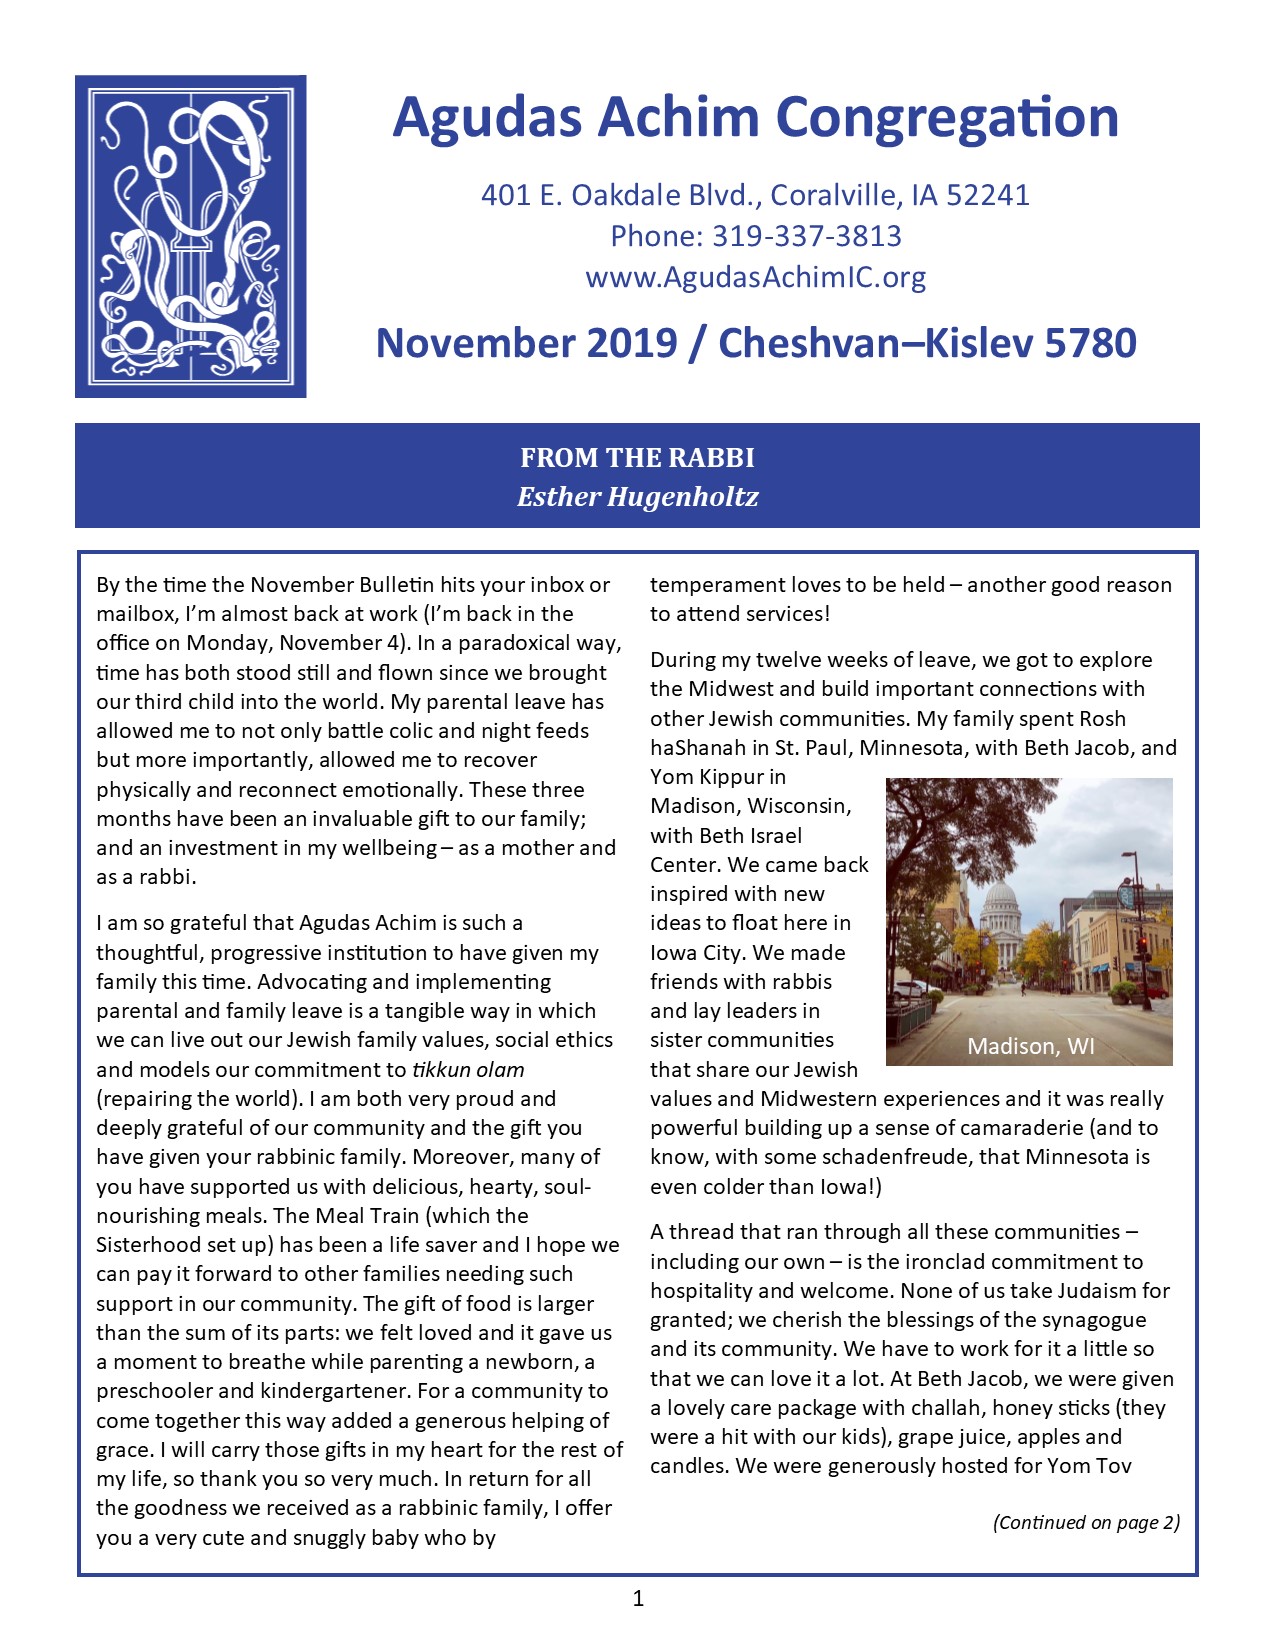 November 2019 News Bulletin